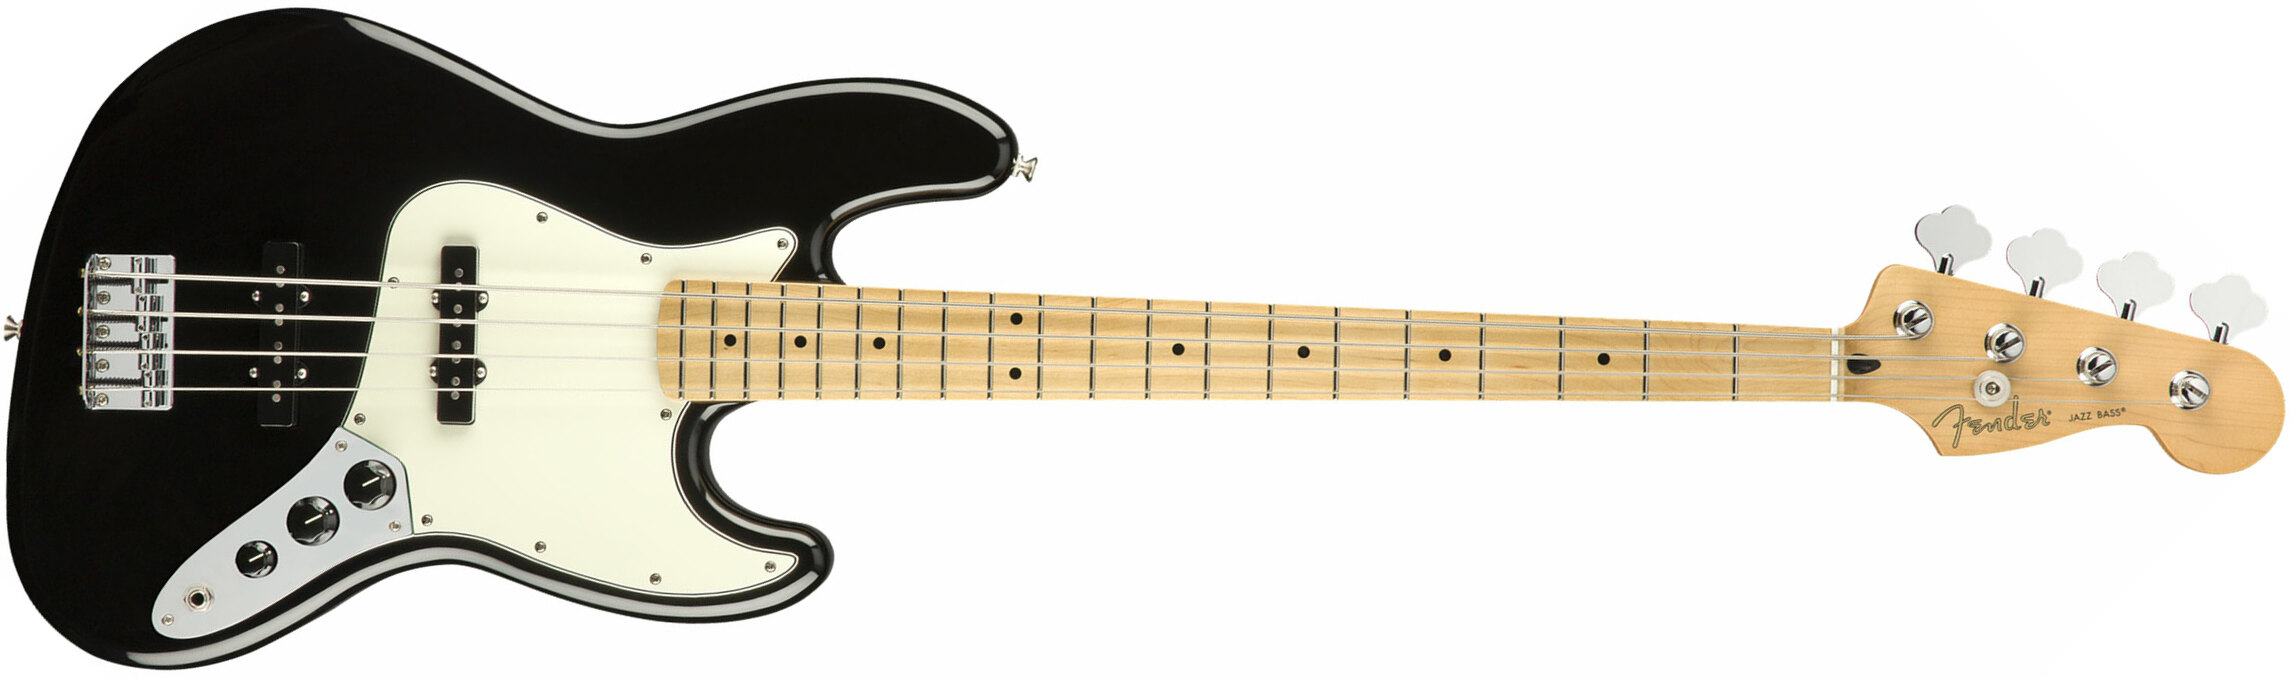 Fender Jazz Bass Player Mex Mn - Black - Basse Électrique Solid Body - Main picture